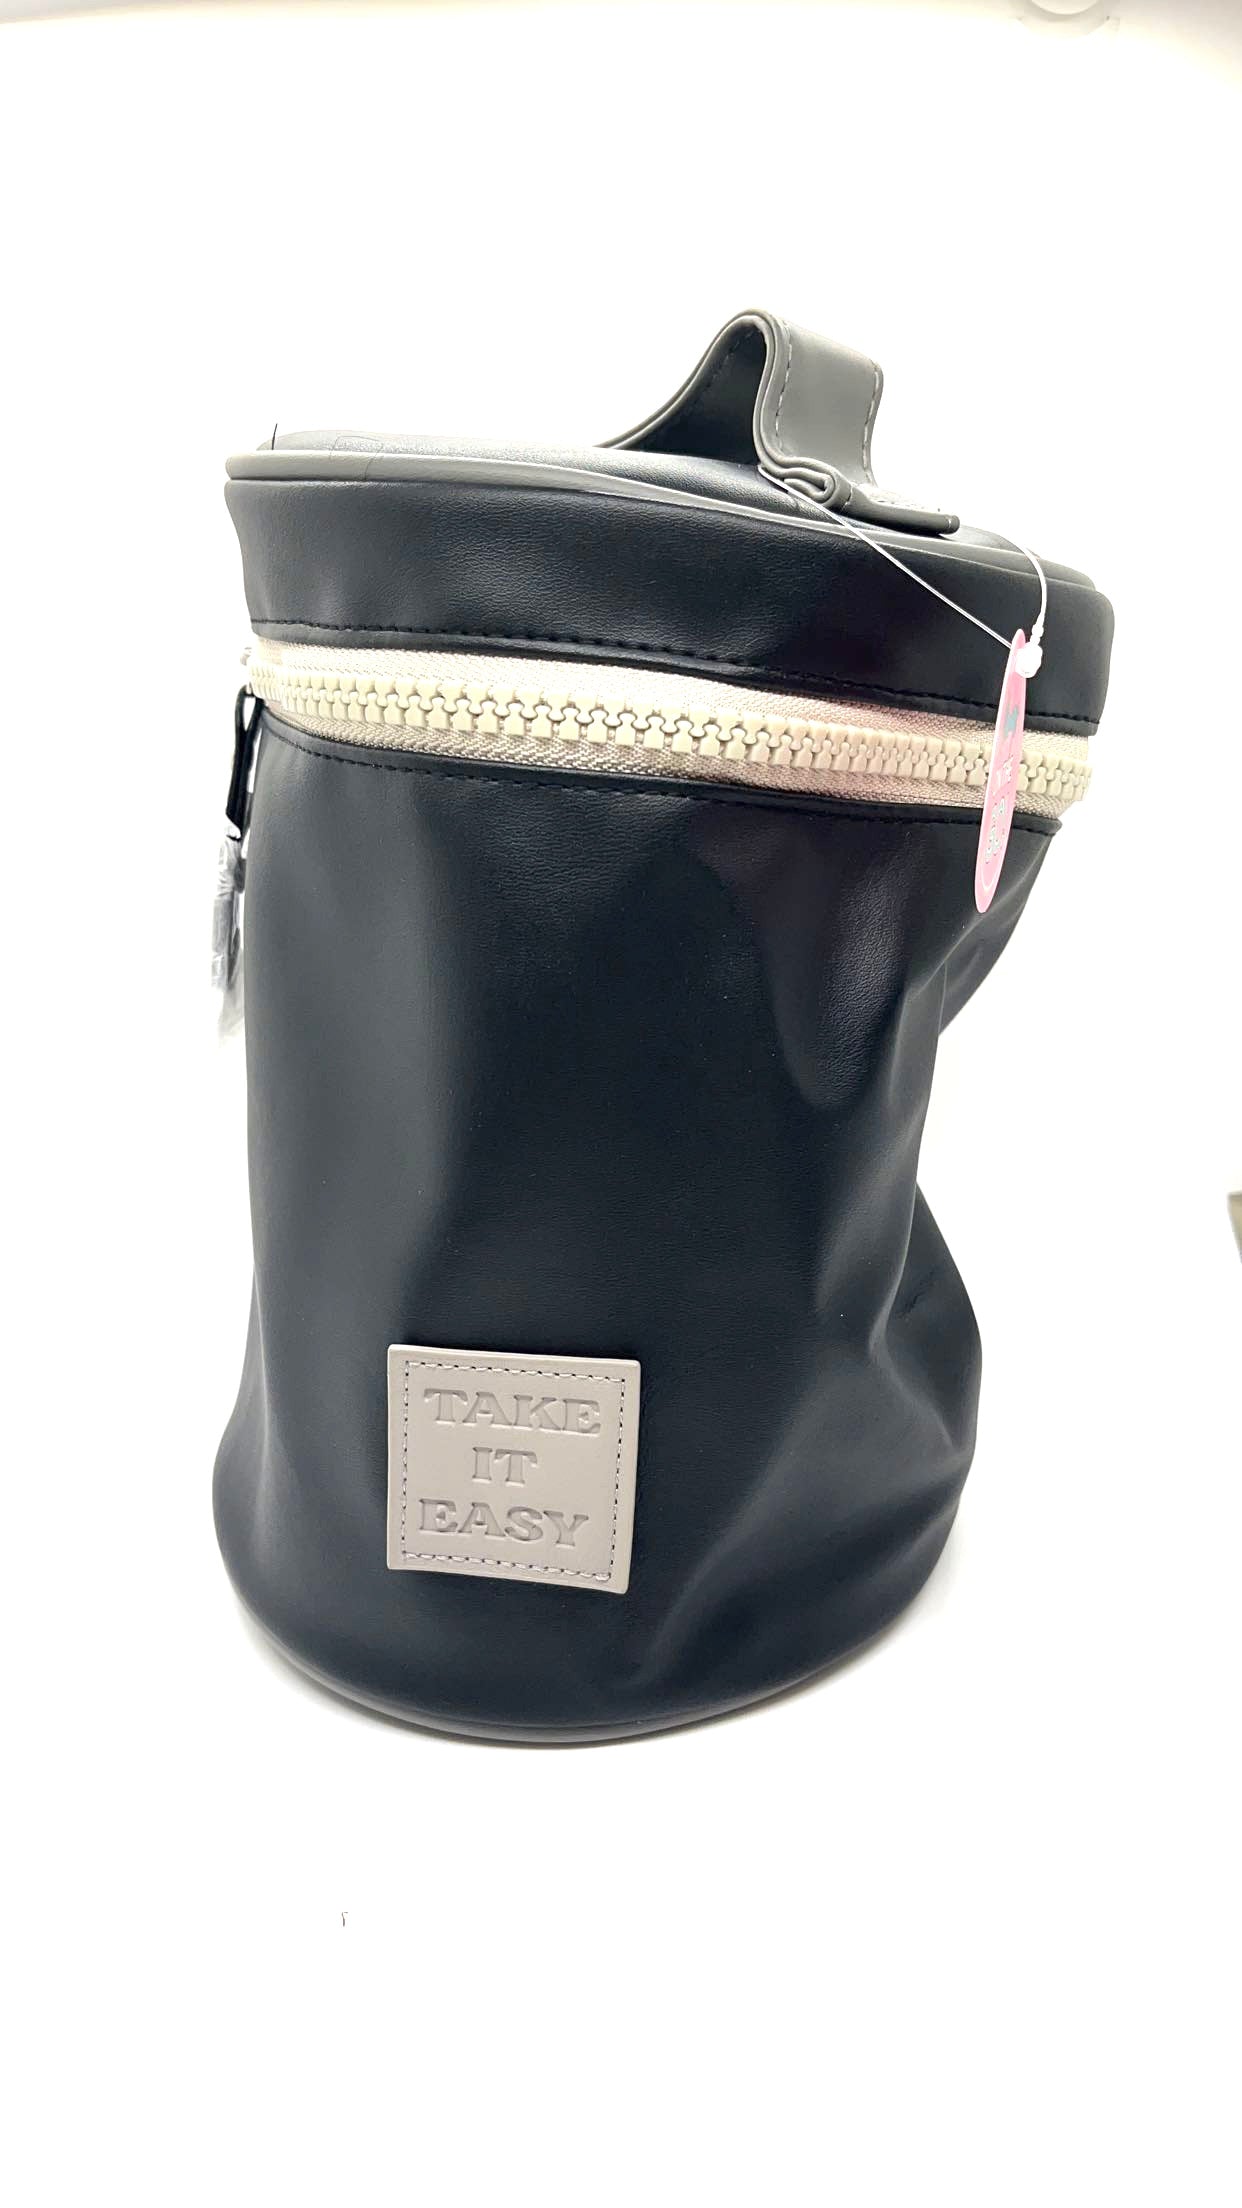 Black Leather Toiletrie Bag